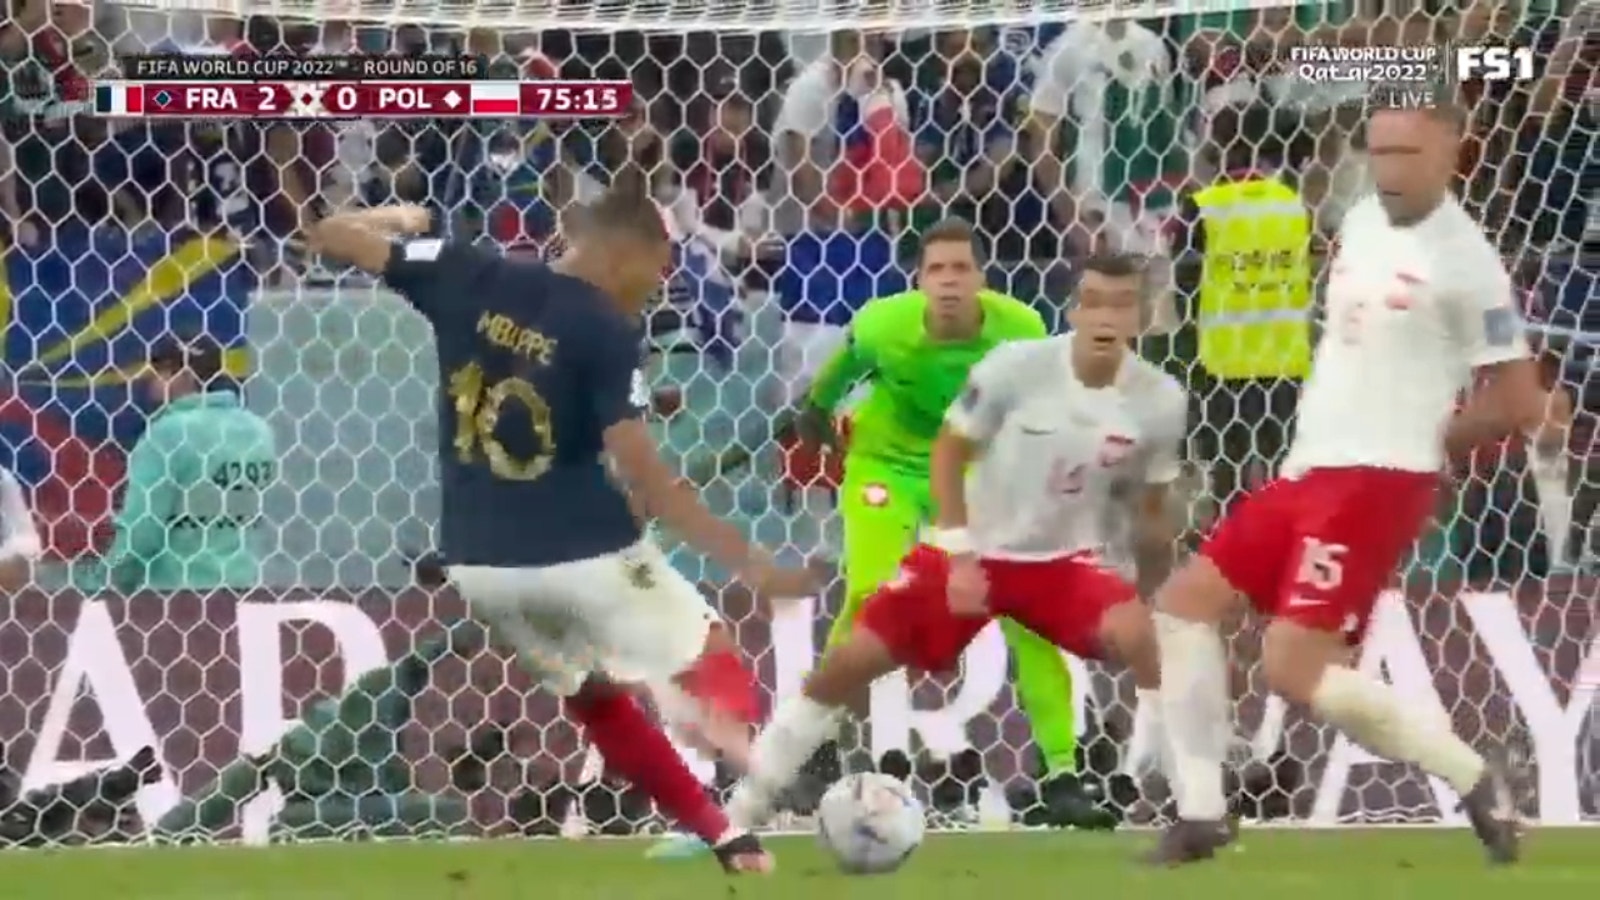 Kylian Mbappé scored to give France a 2-0 lead over Poland